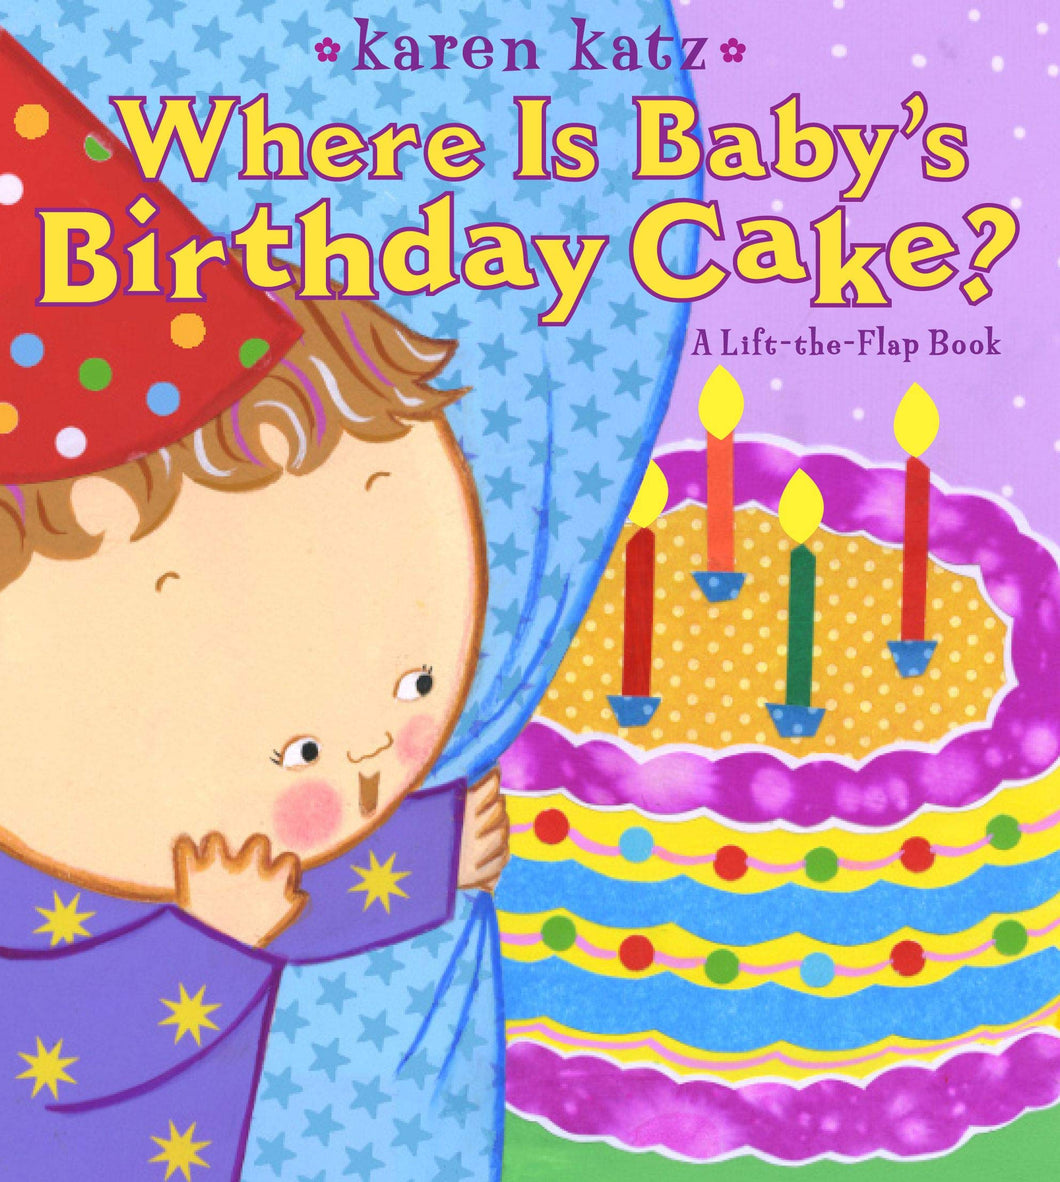 where is baby's birthday cake? esikidz marketplace children books baby books board books board books for babies 